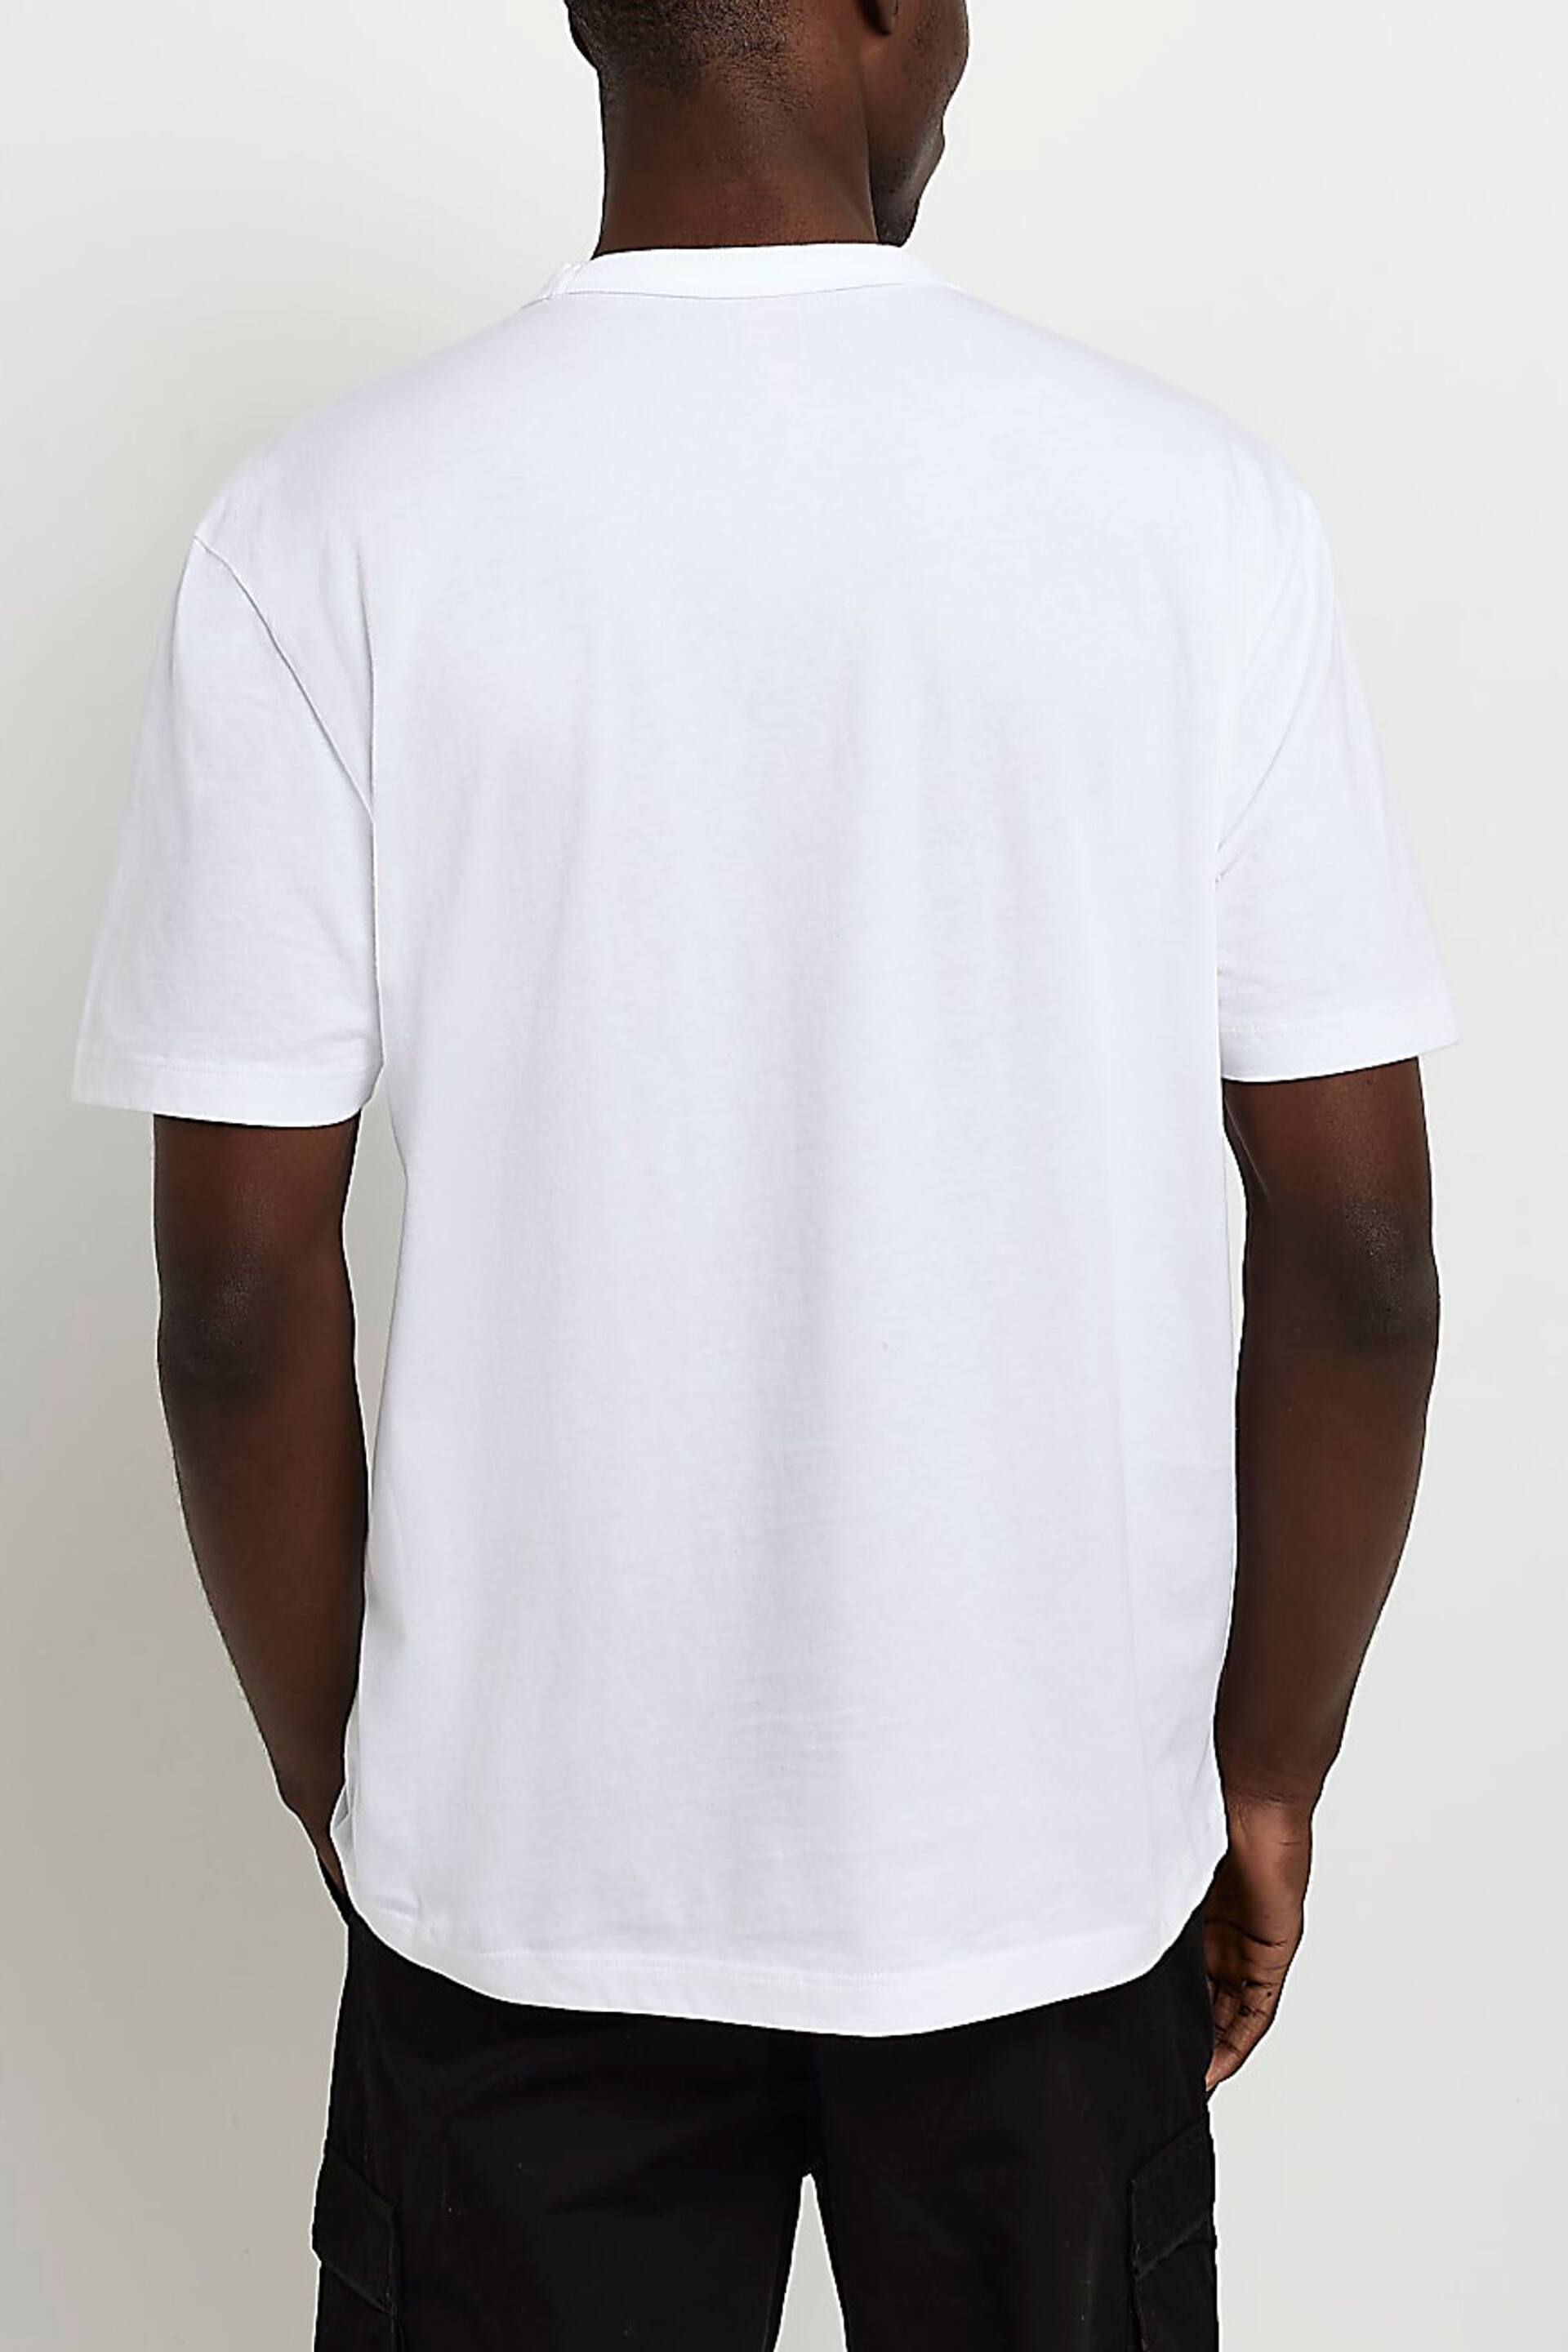 River Island White Regular T-Shirts 5 Pack - Image 4 of 6